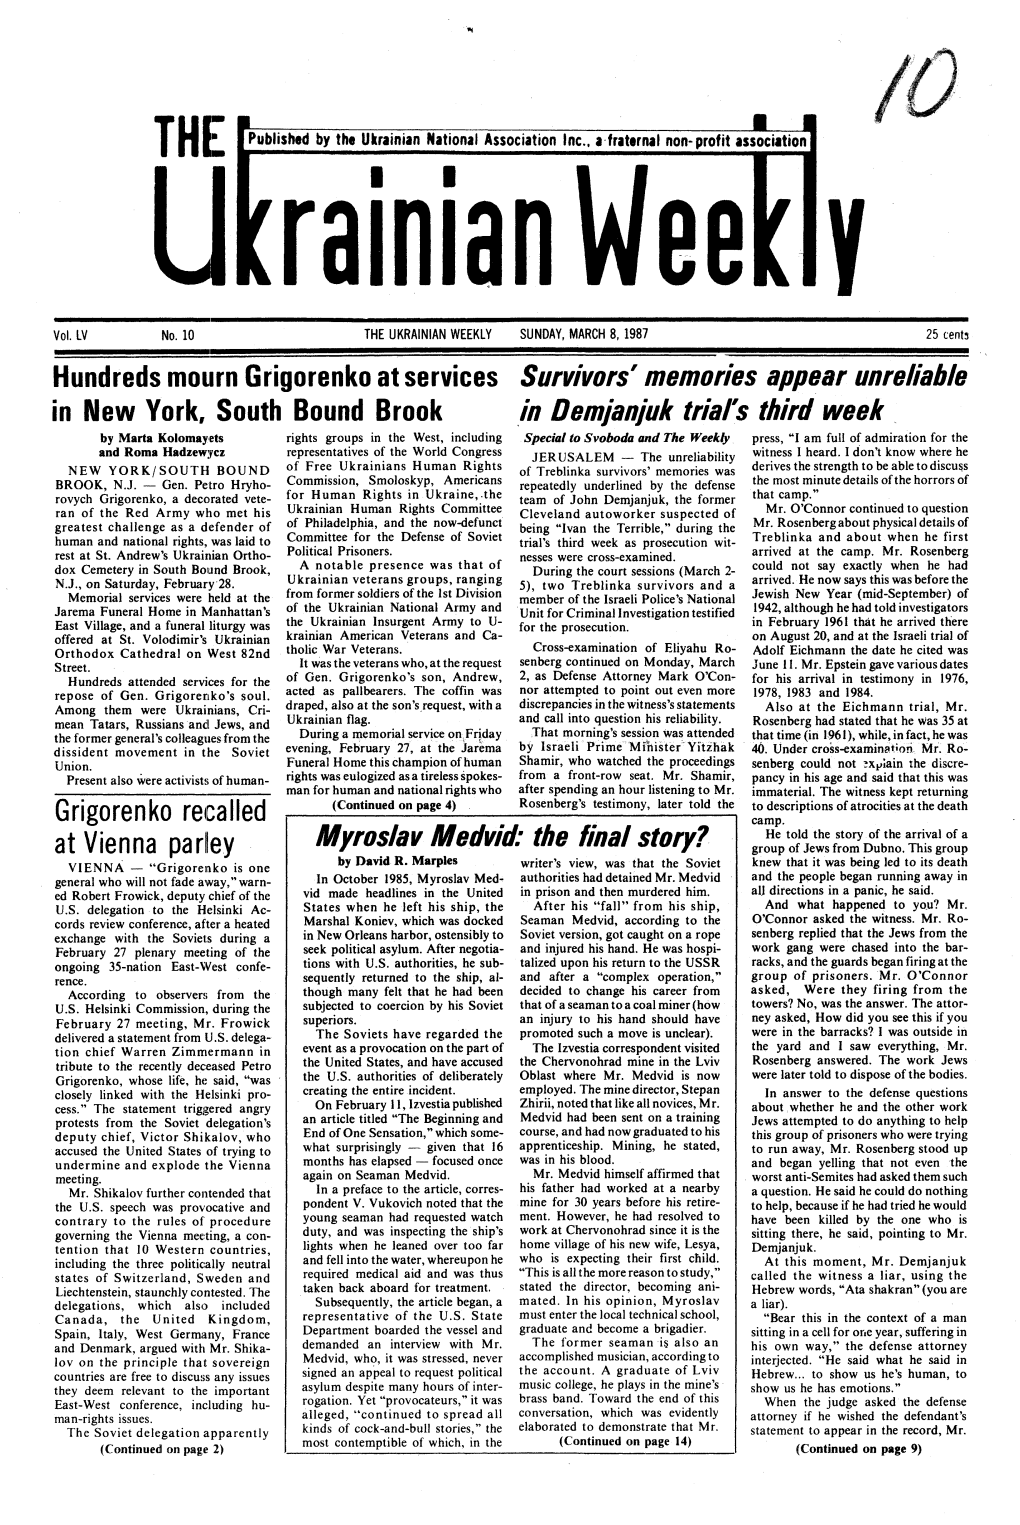 The Ukrainian Weekly 1987, No.10